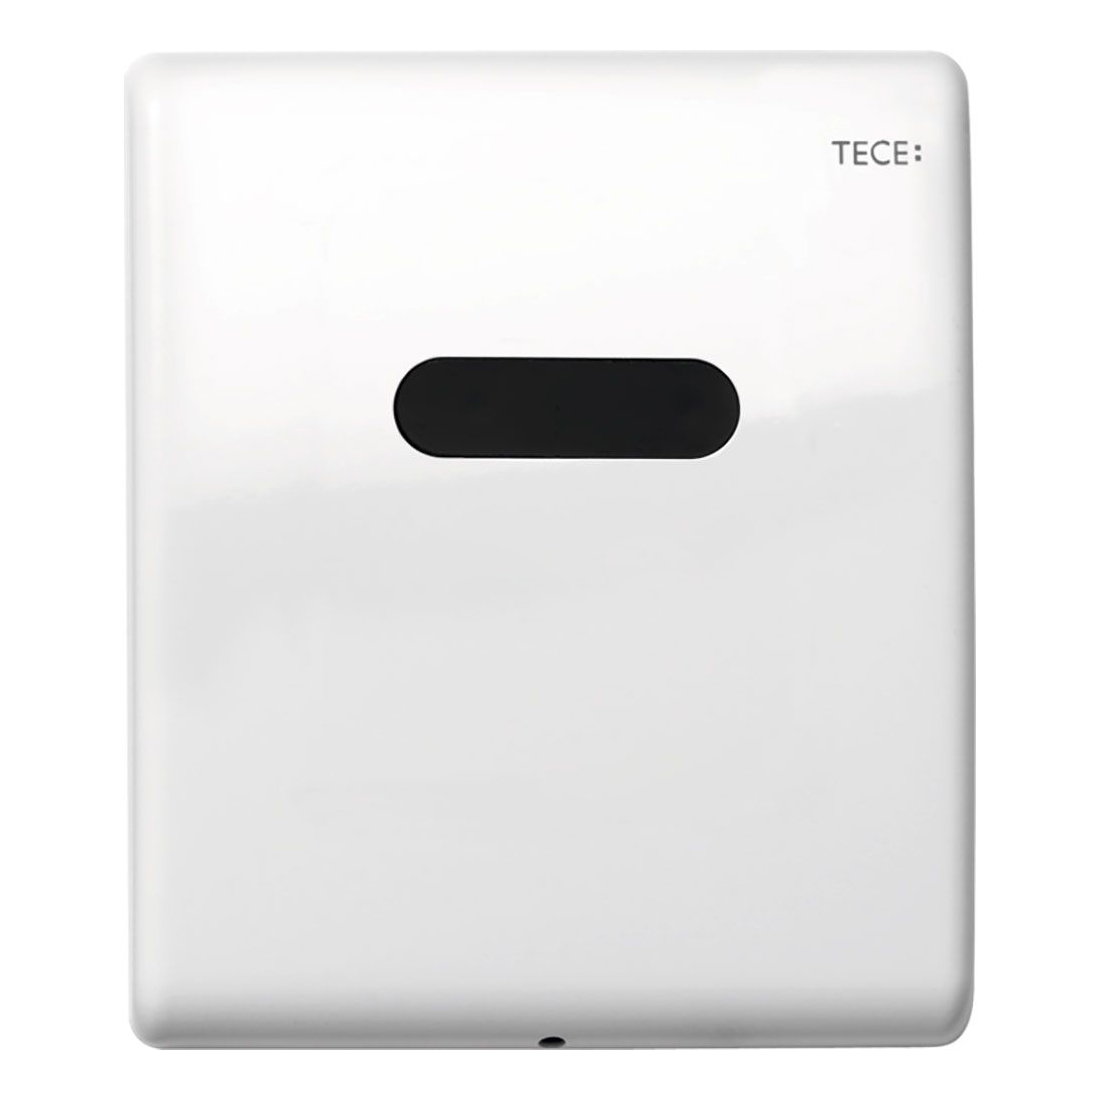 Кнопка для инсталляции Tece TECEplanus Urinal 9242356, 6 V батарея, белая глянцевая кнопка для инсталляции tece teceplanus ir 9820200 хром глянцевый